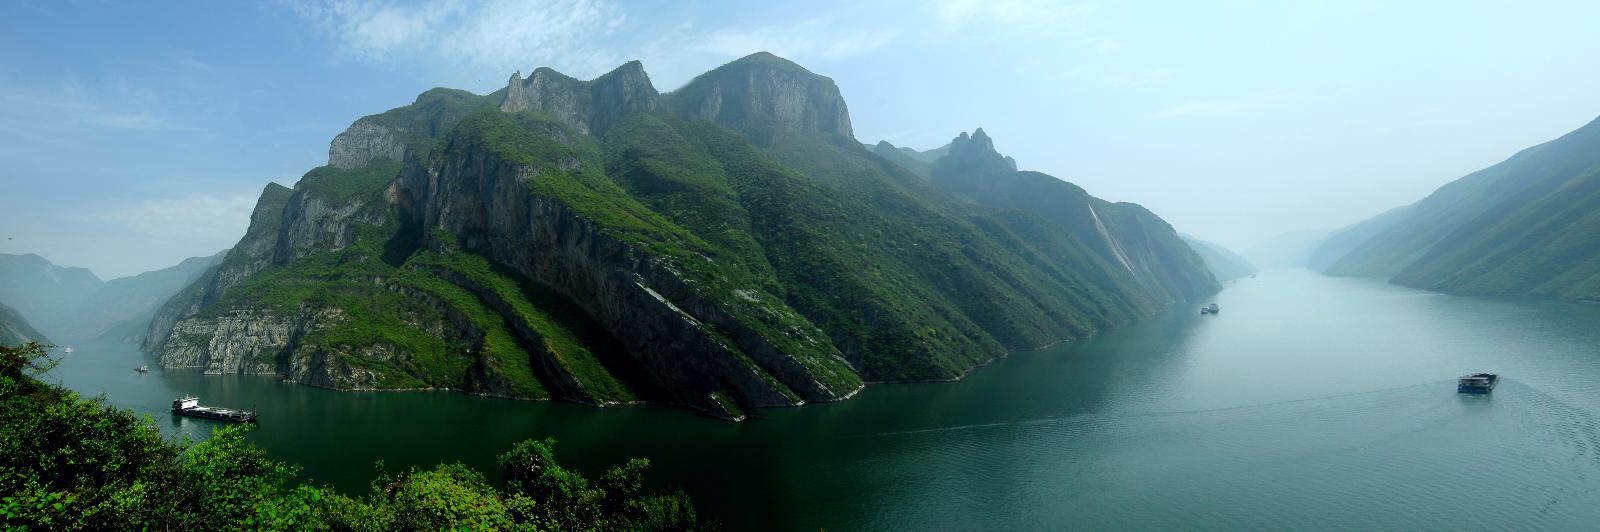 Yangtze River - Scenic China